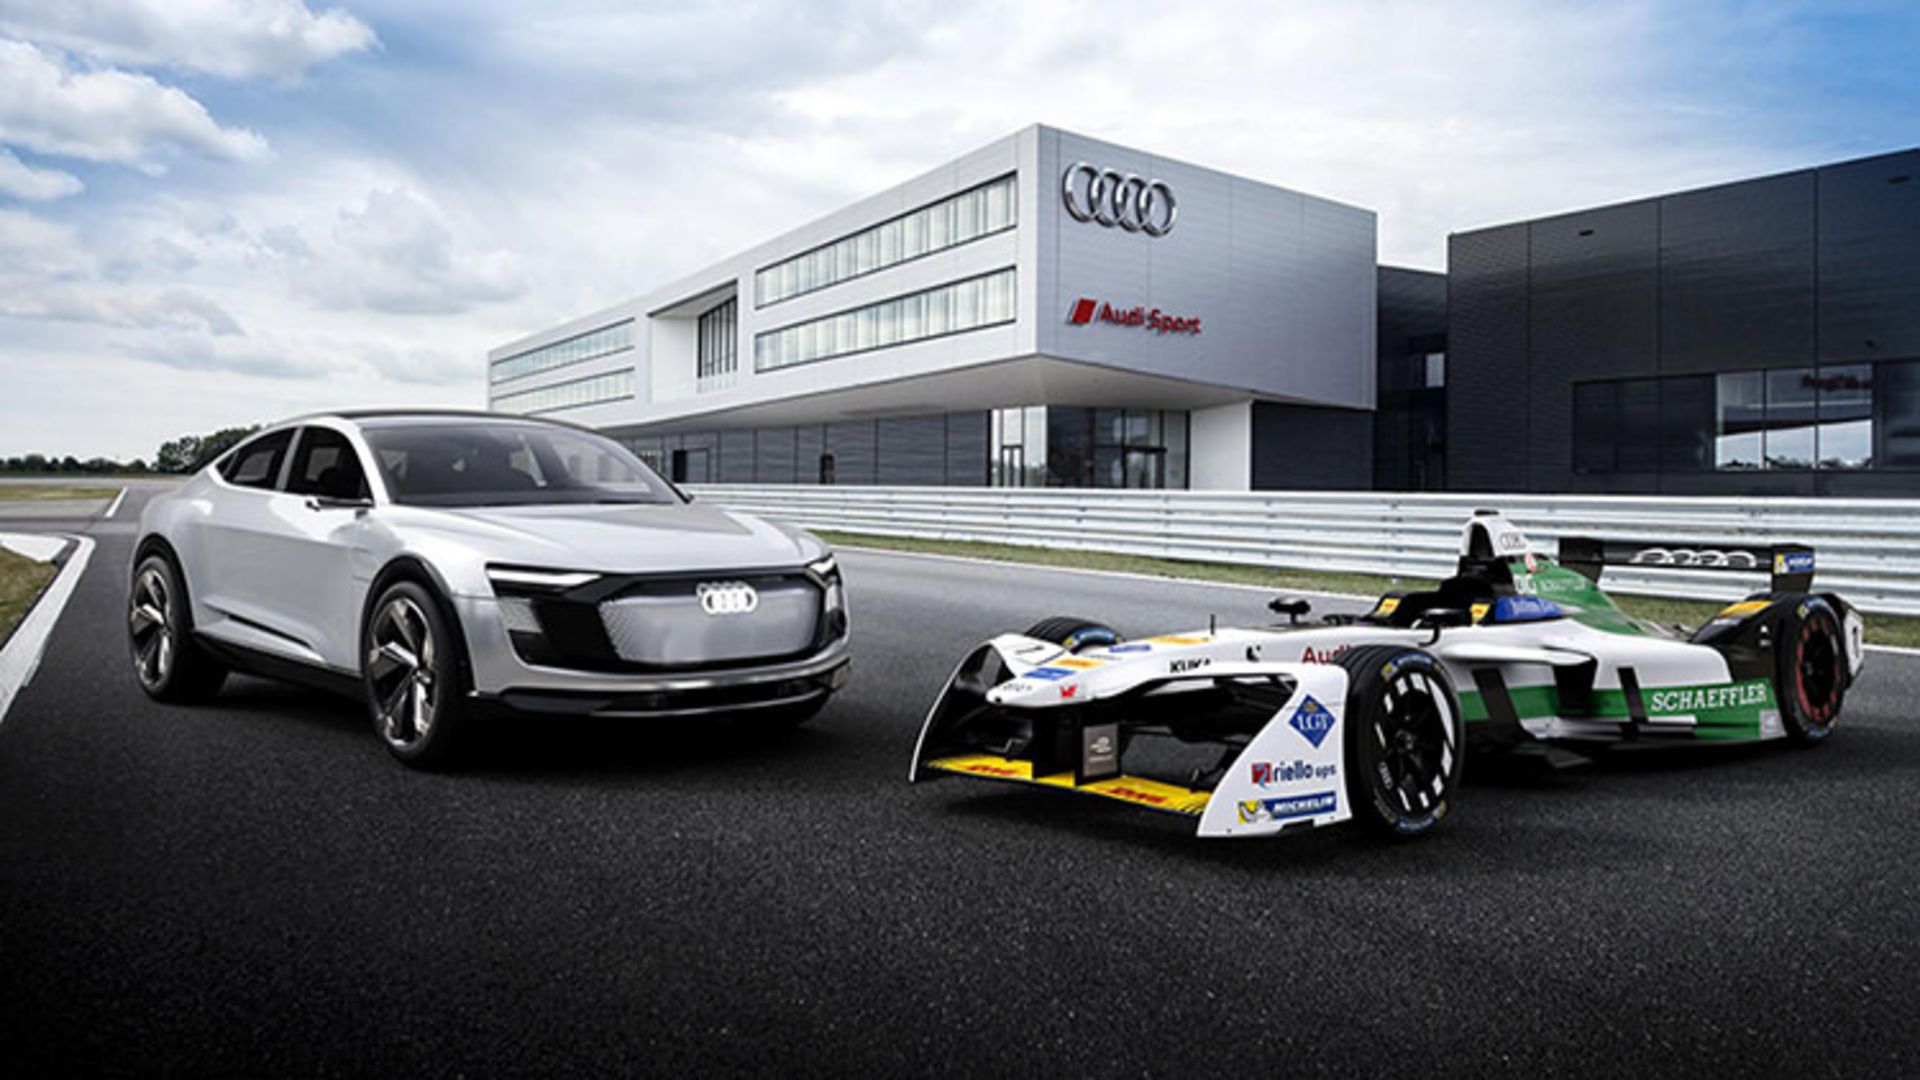 Audi Electric Race Car / خودروی الکتریکی مسابقه‌ای آئودی